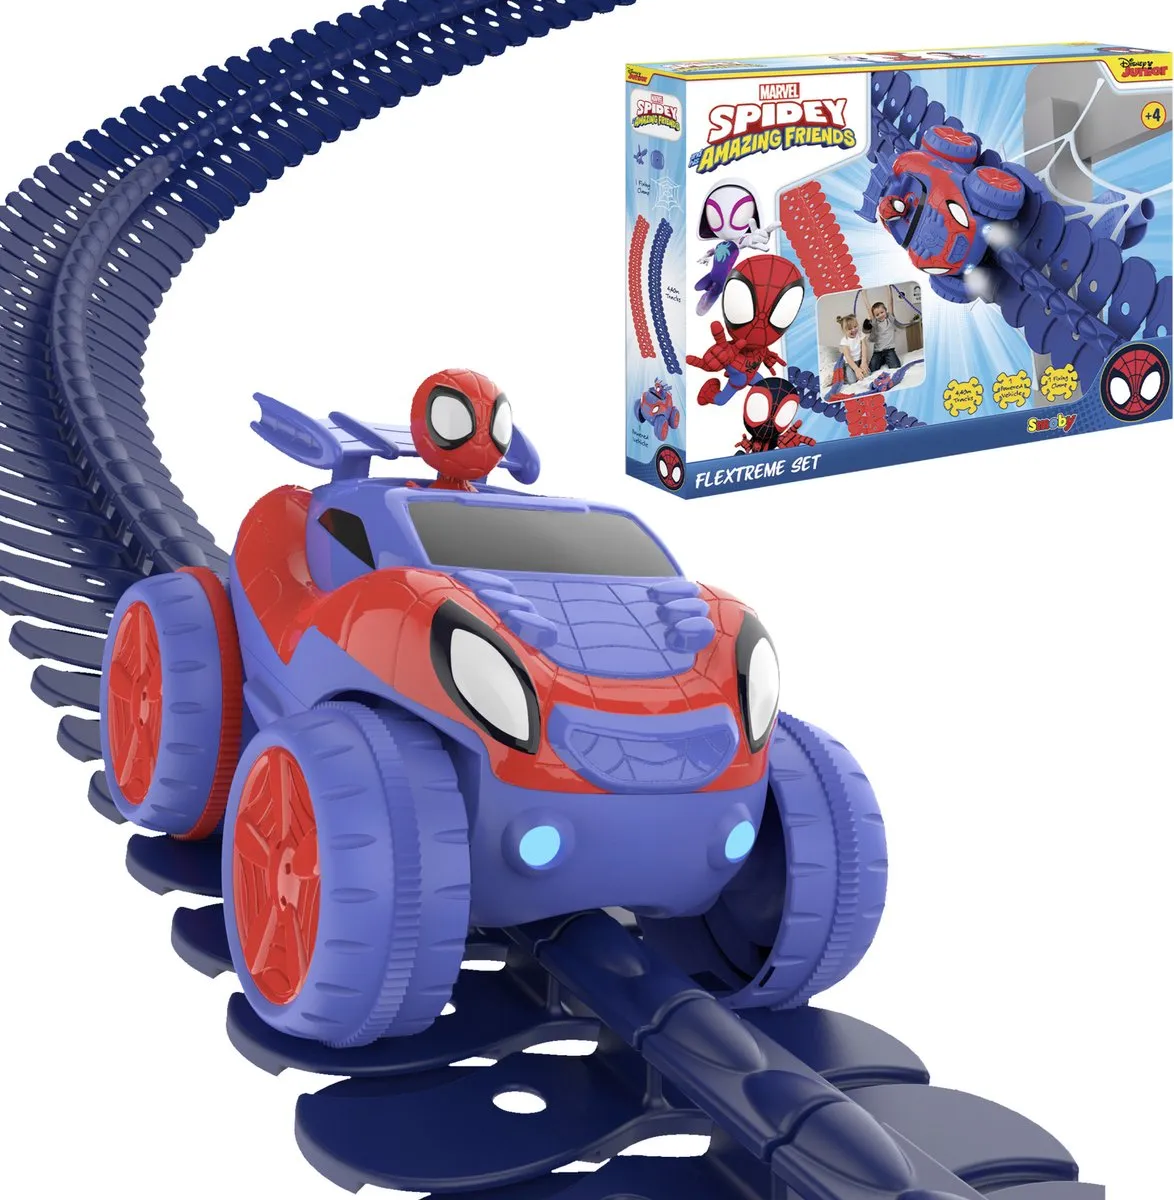 Smoby - Disney Marvel Spiderman - Flextreme Discovery Set - Racebaan - 4,4m speelgoed